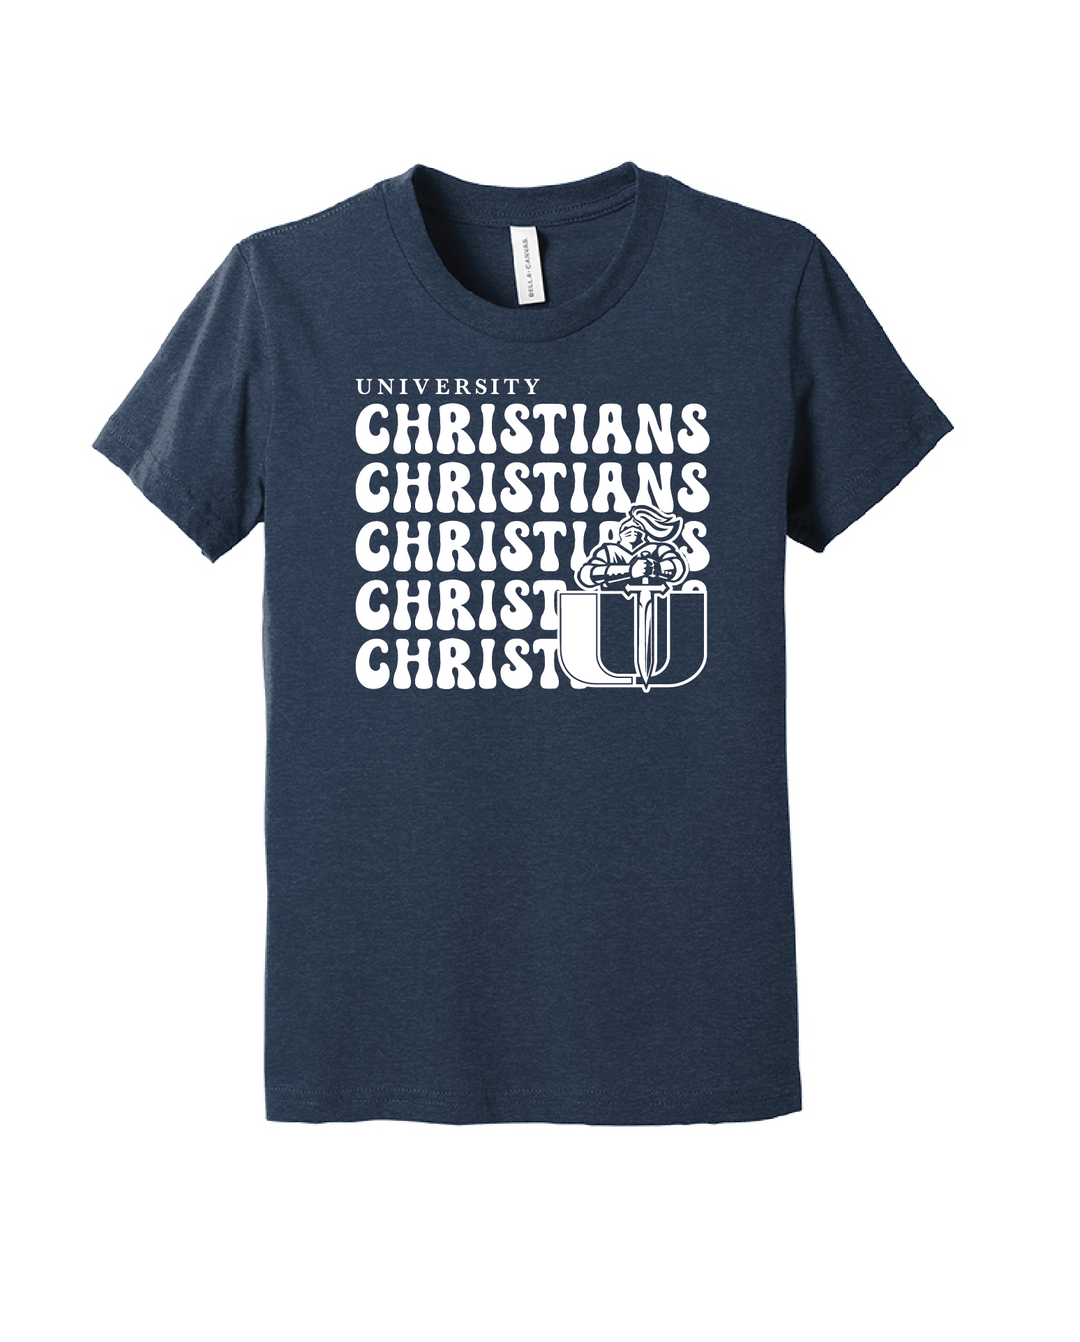 University Christians Retro Cotton Tee